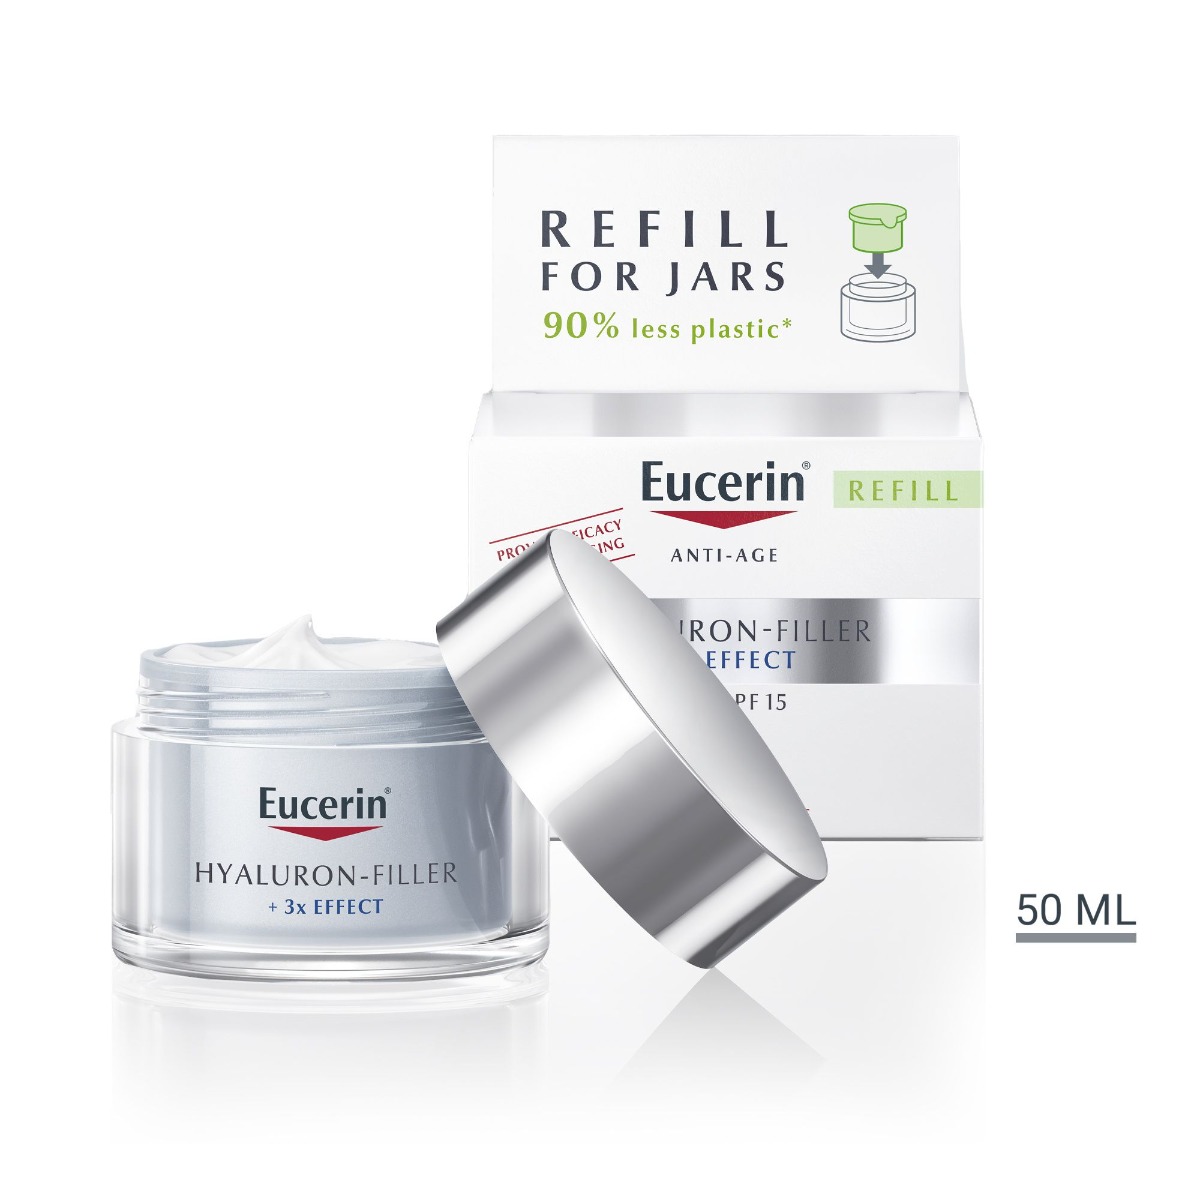 Eucerin Hyaluron-Filler + 3x Effect denní krém refill 50 ml Eucerin